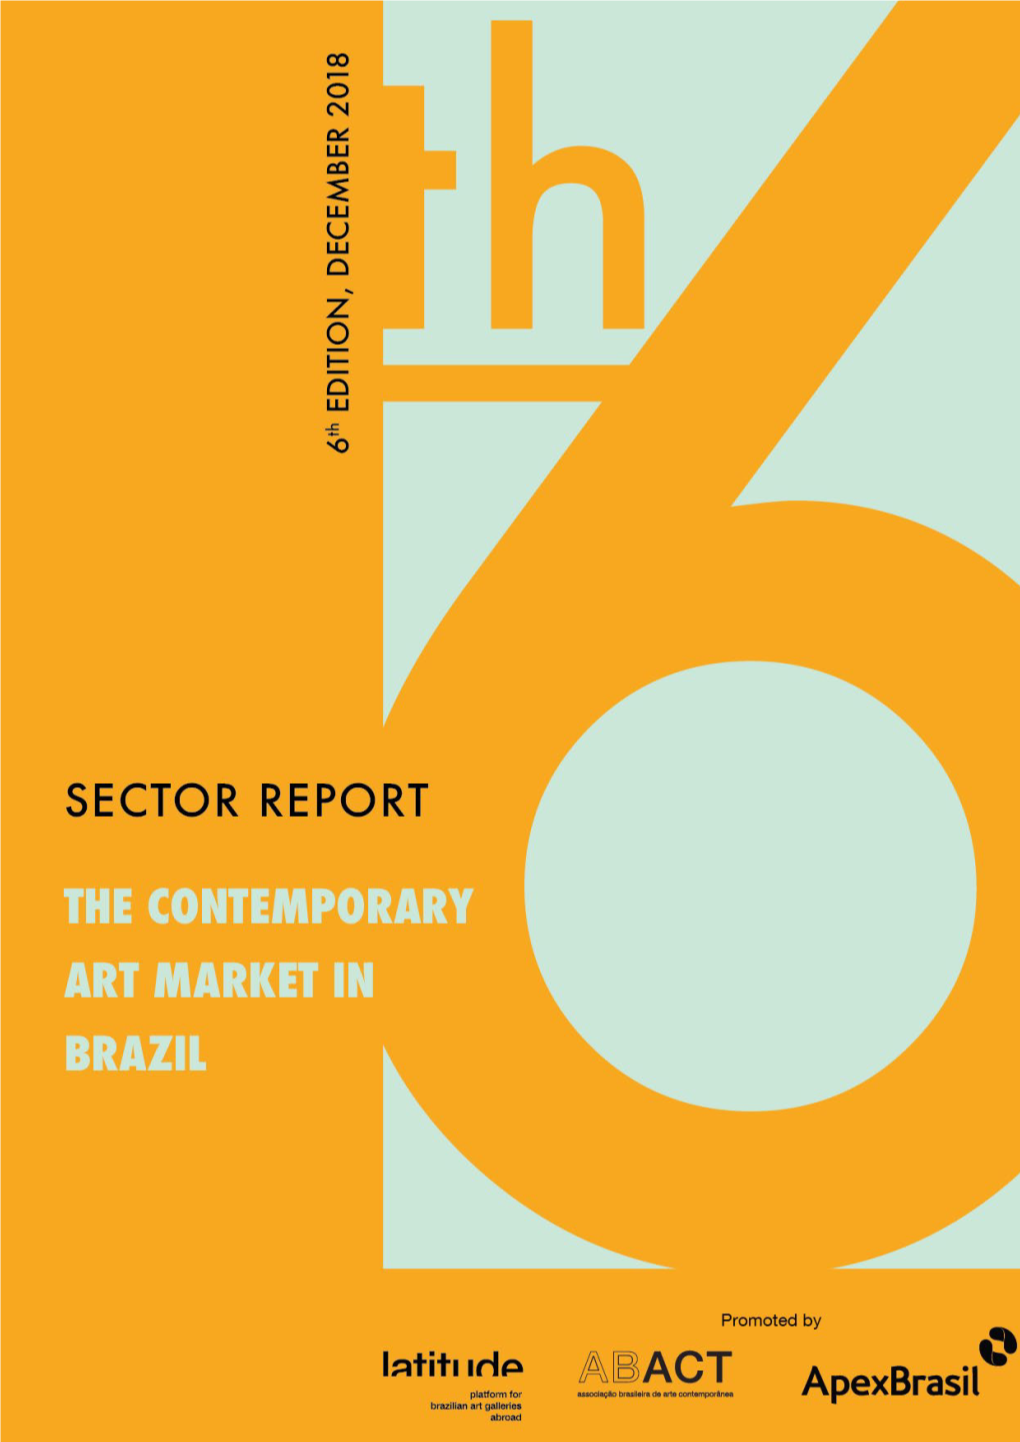 The Brazilian Contemporary Art Market 2